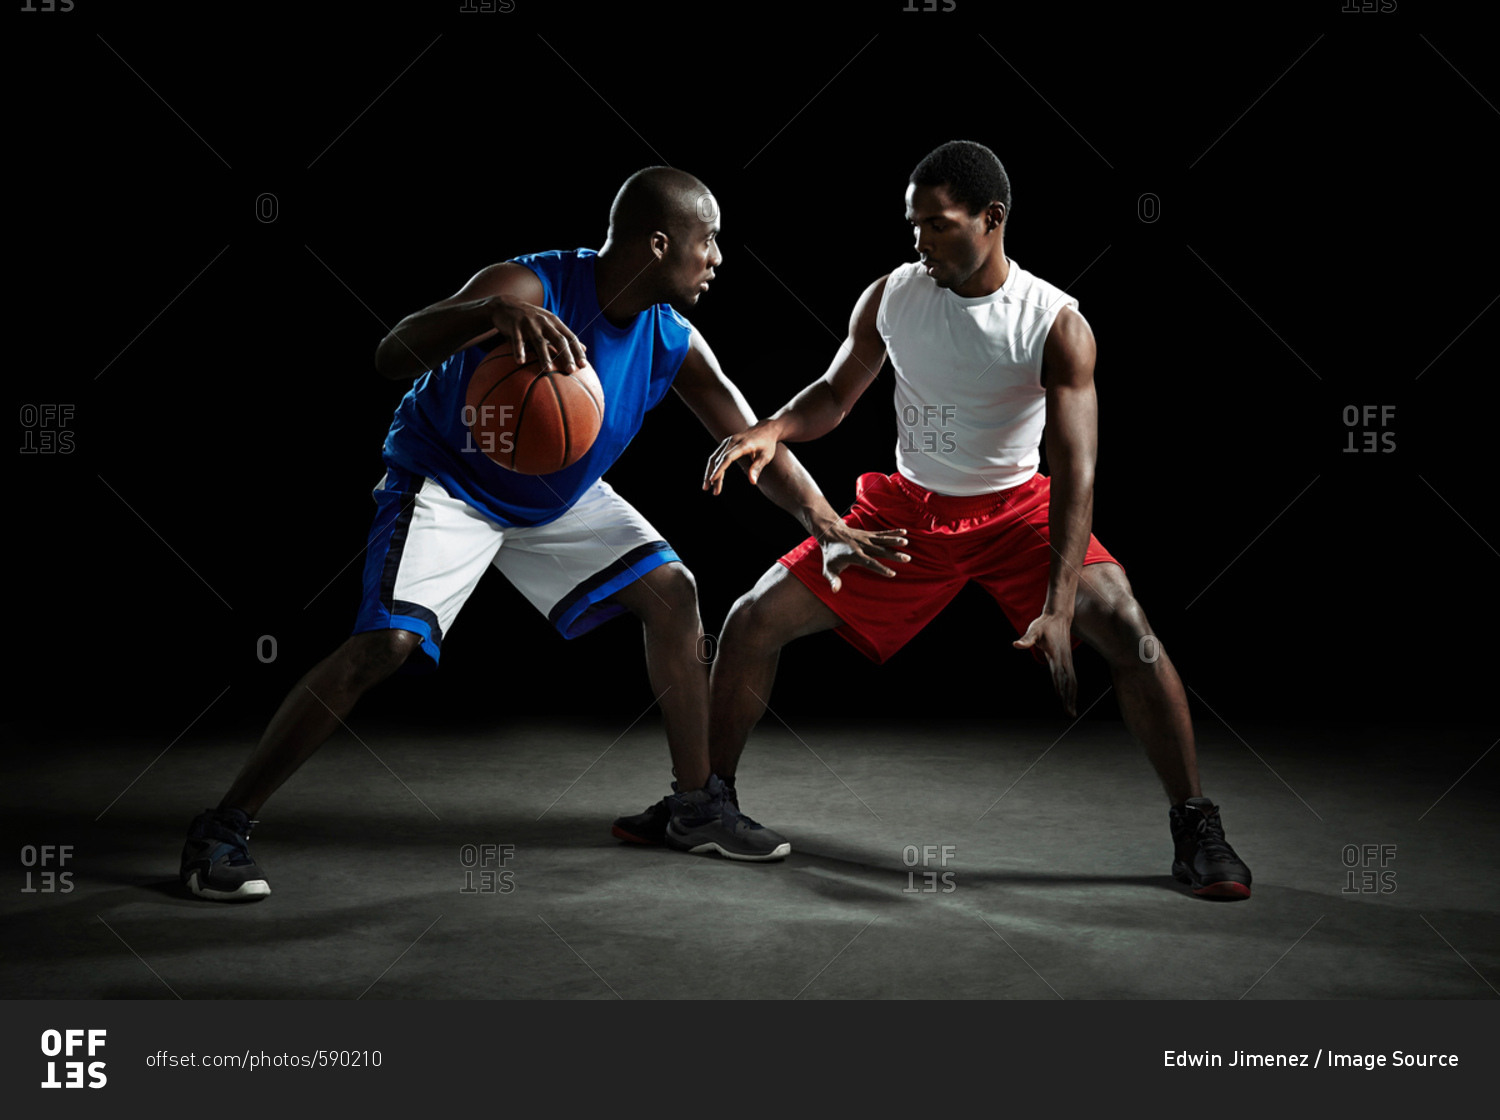 Basketball players competing for ball